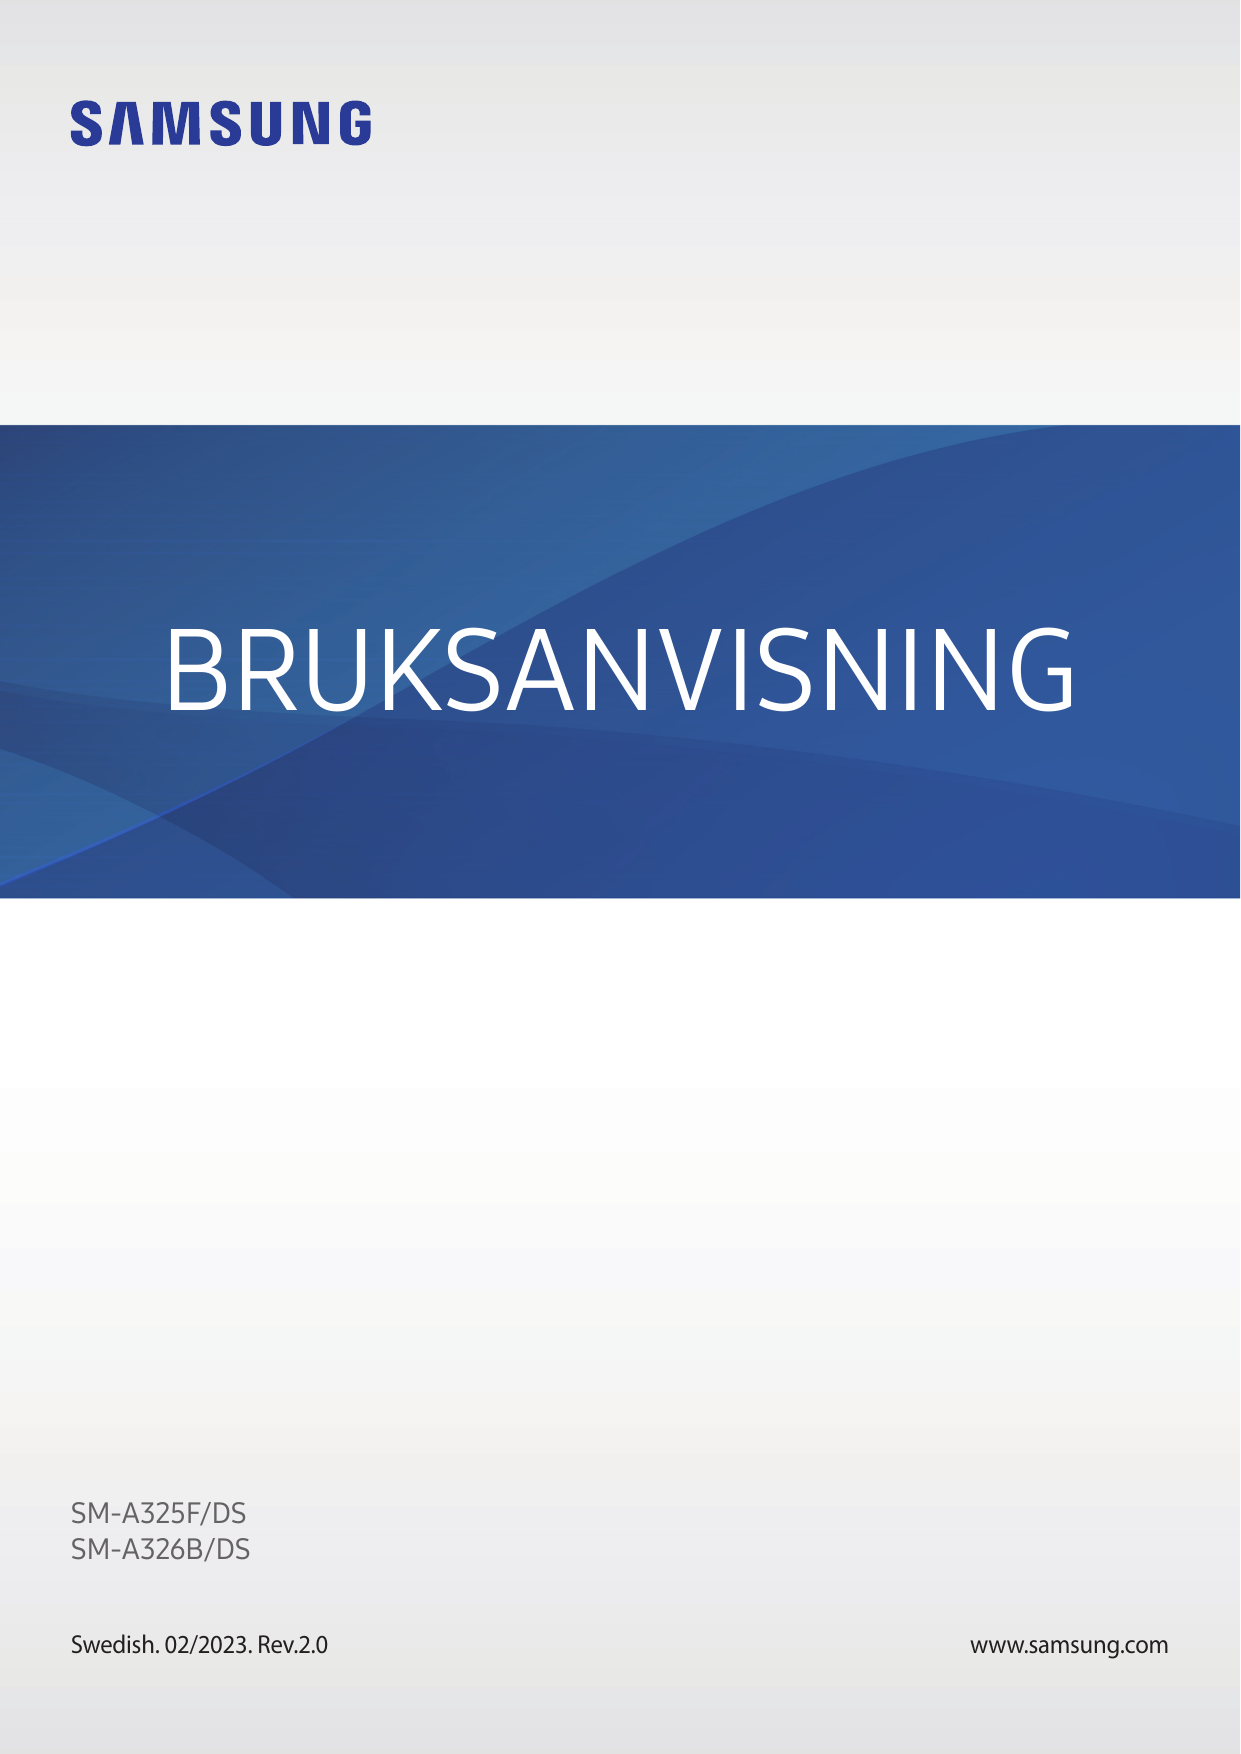 BRUKSANVISNINGSM-A325F/DSSM-A326B/DSSwedish. 02/2023. Rev.2.0www.samsung.com